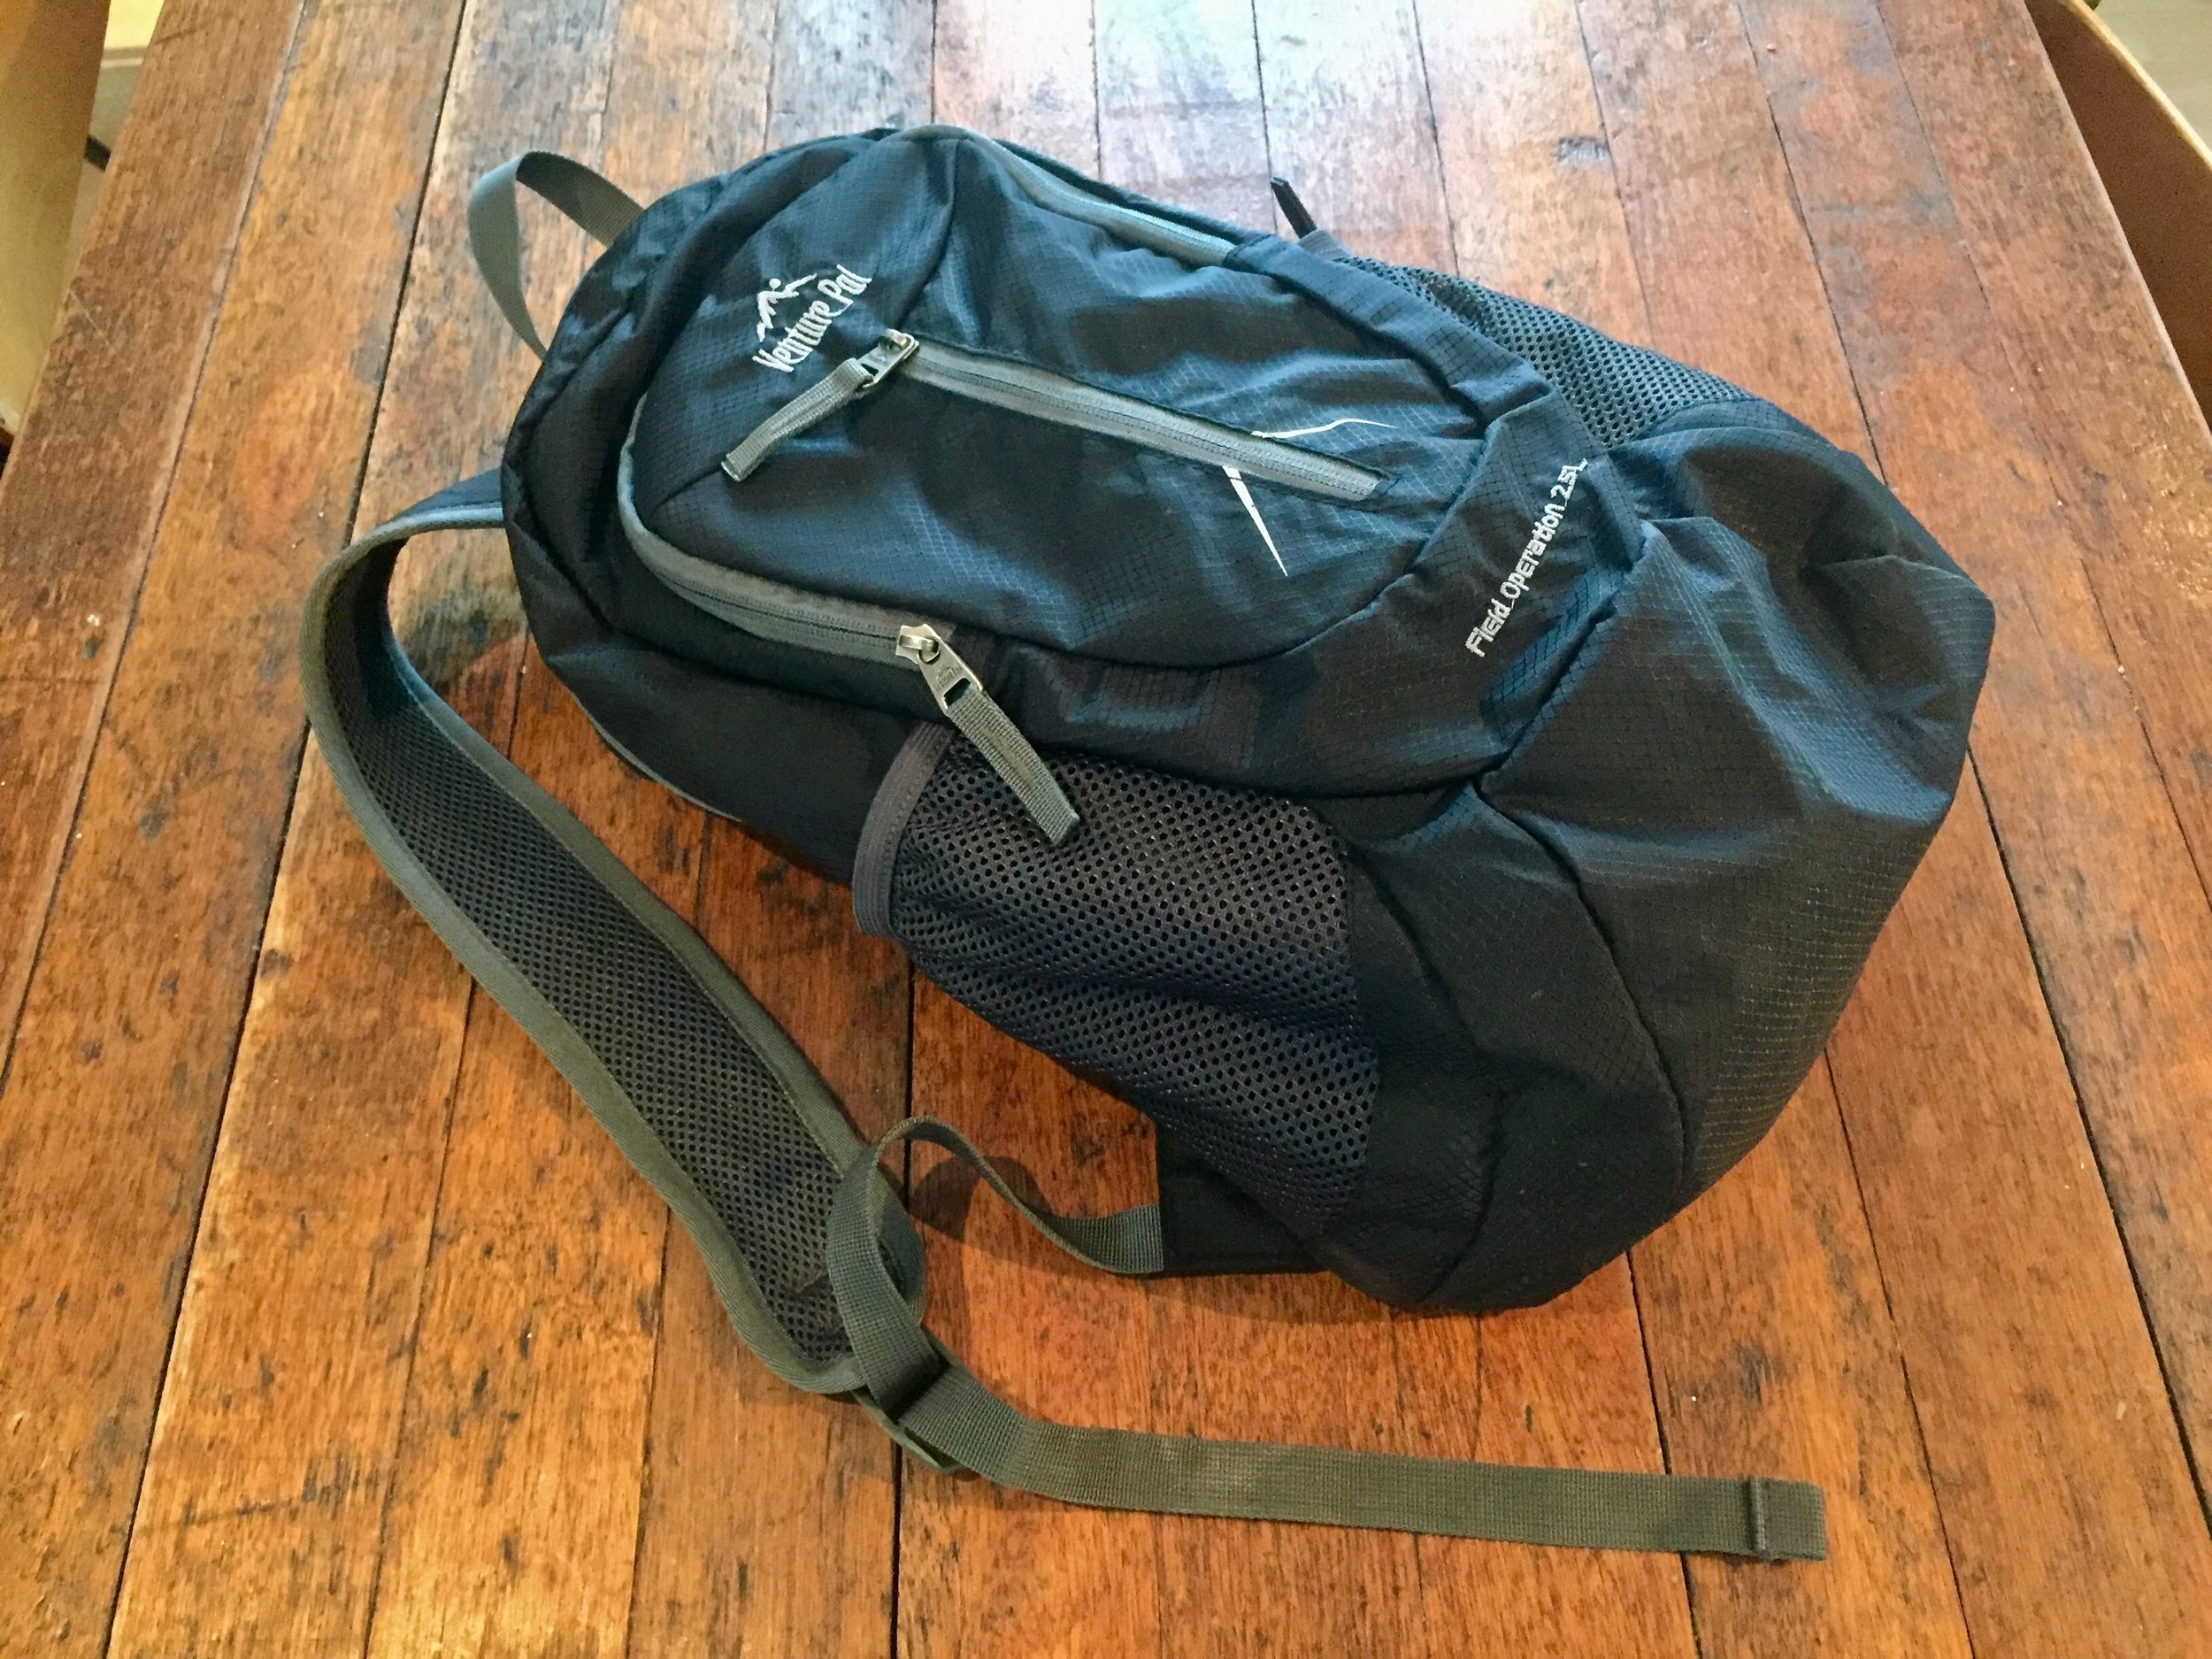 Venture pal lightweight backpack